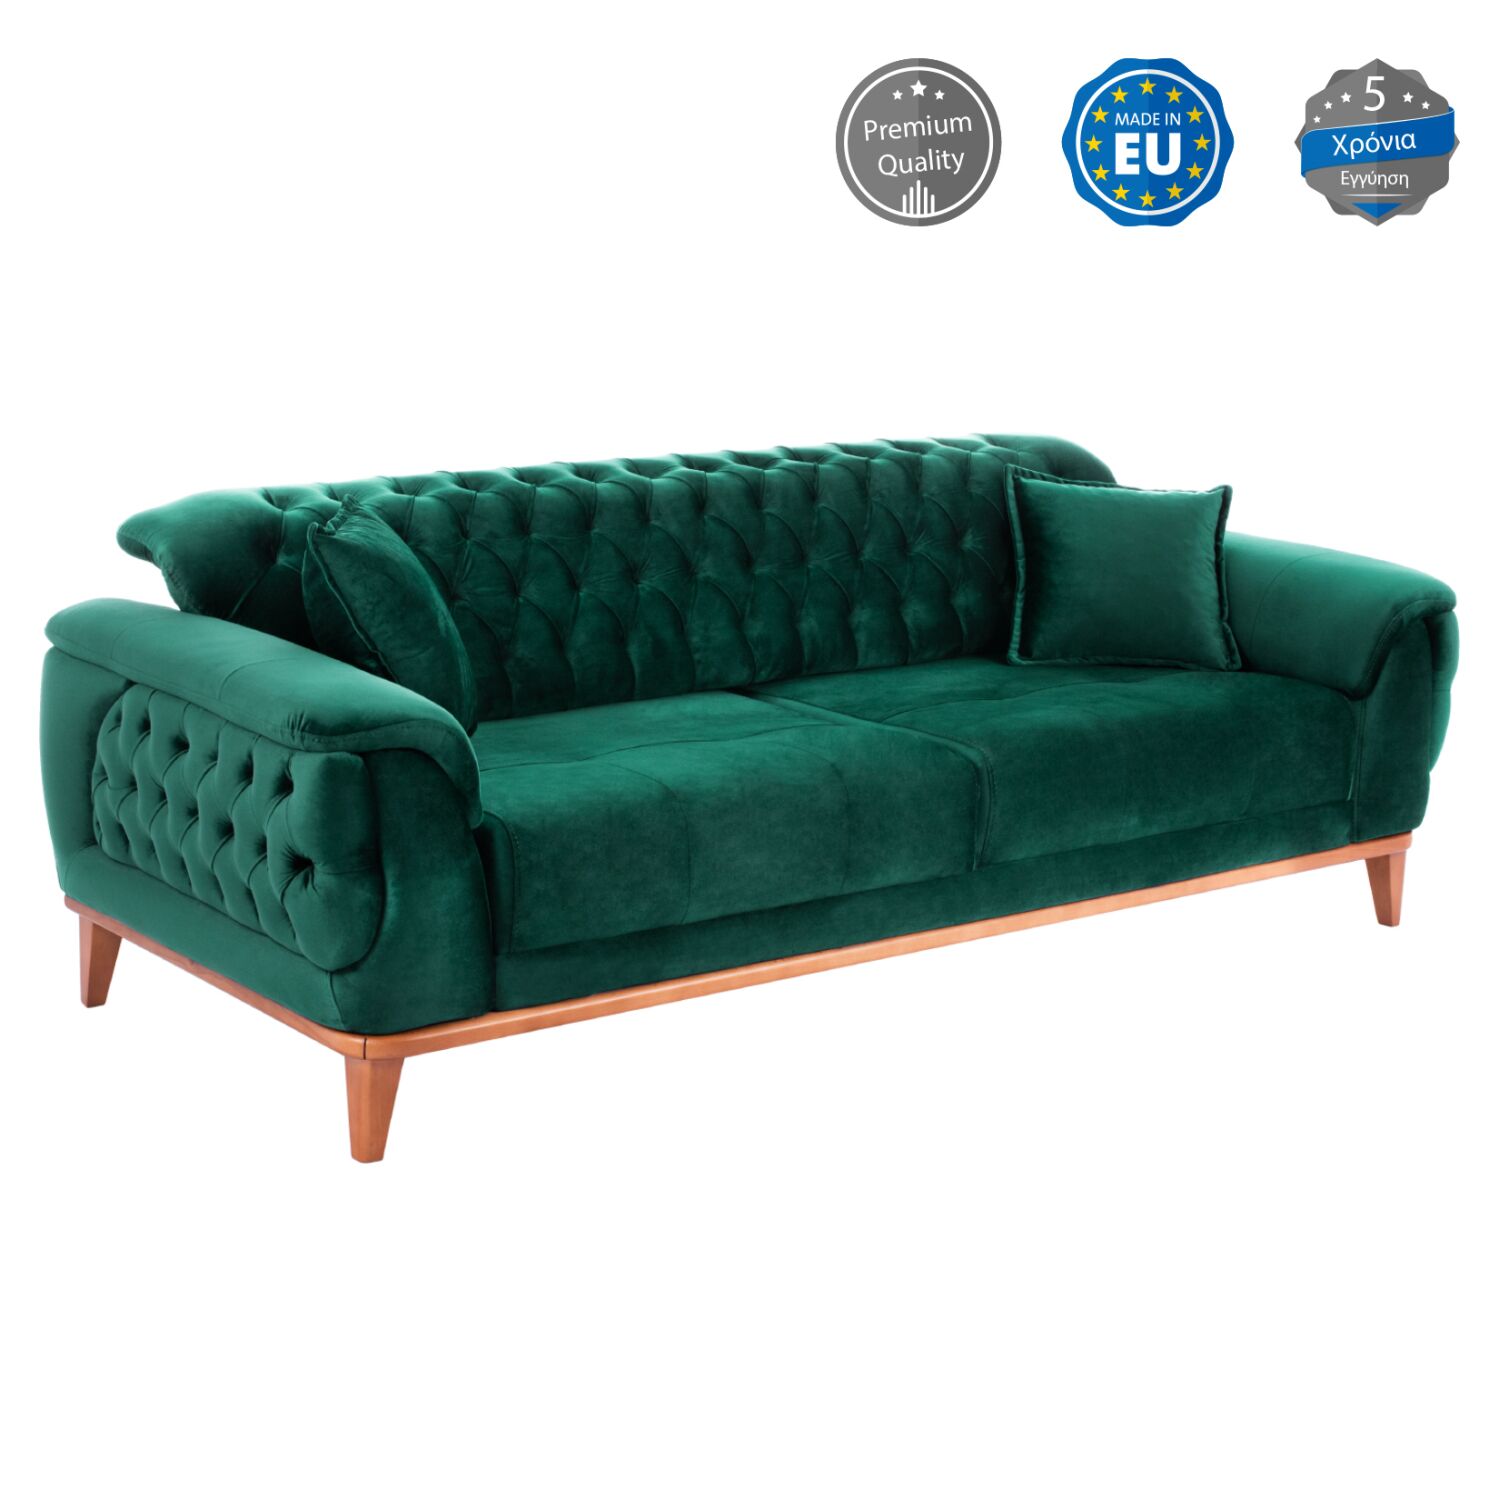 HM3249.13 BENNINGTON 3-seater sofa-bed, cypress green velvet, 240x95x80